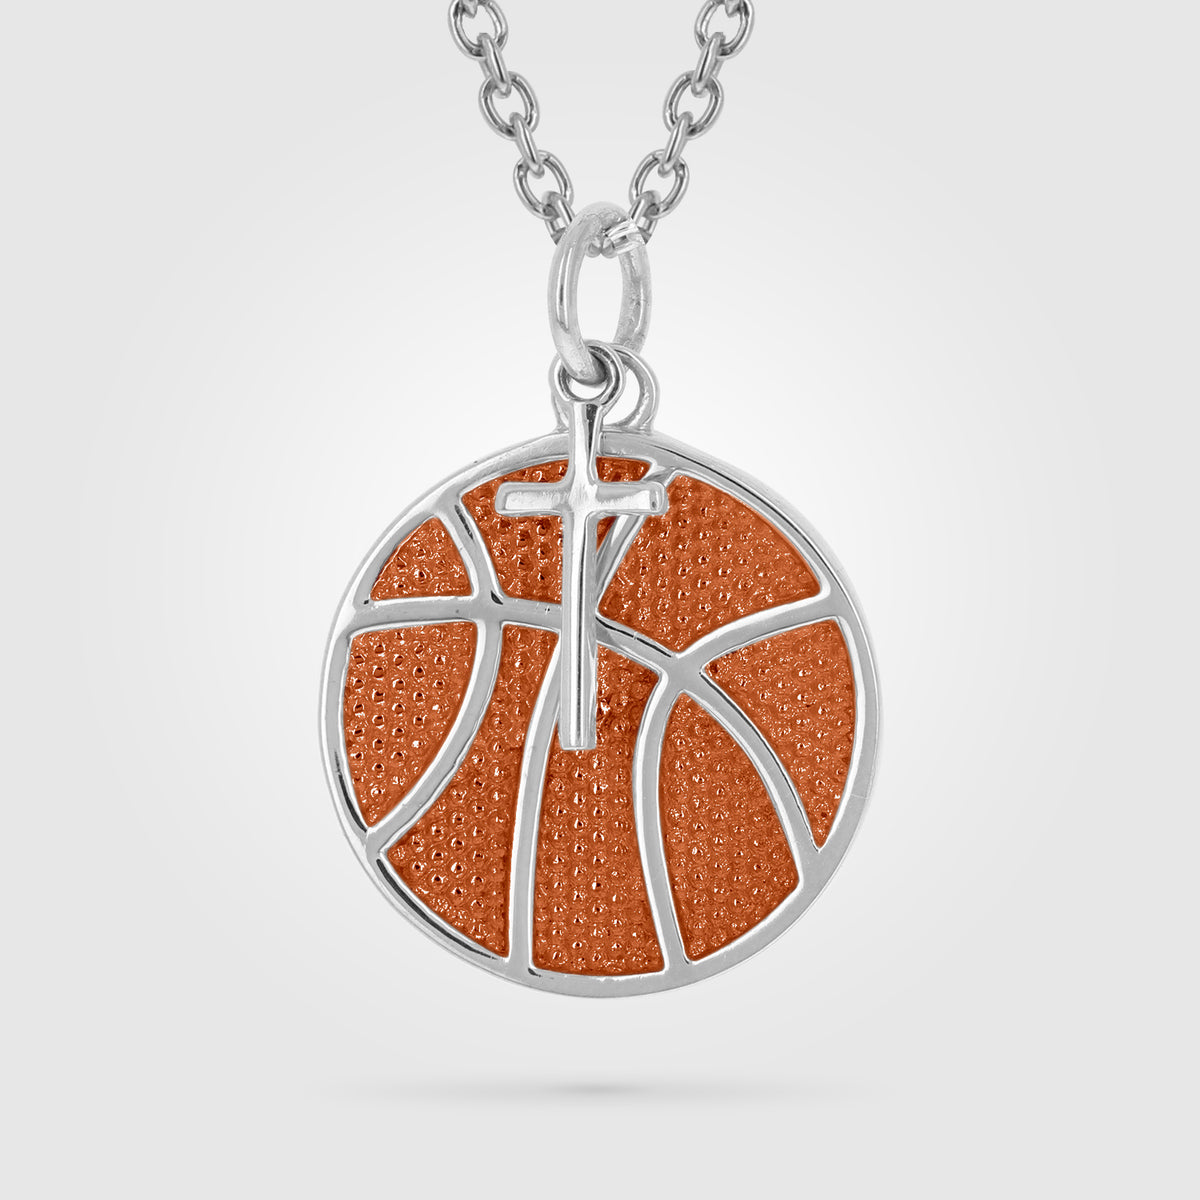 Gold Orange Enameled Mini Basketball Necklace With Dangle Cross